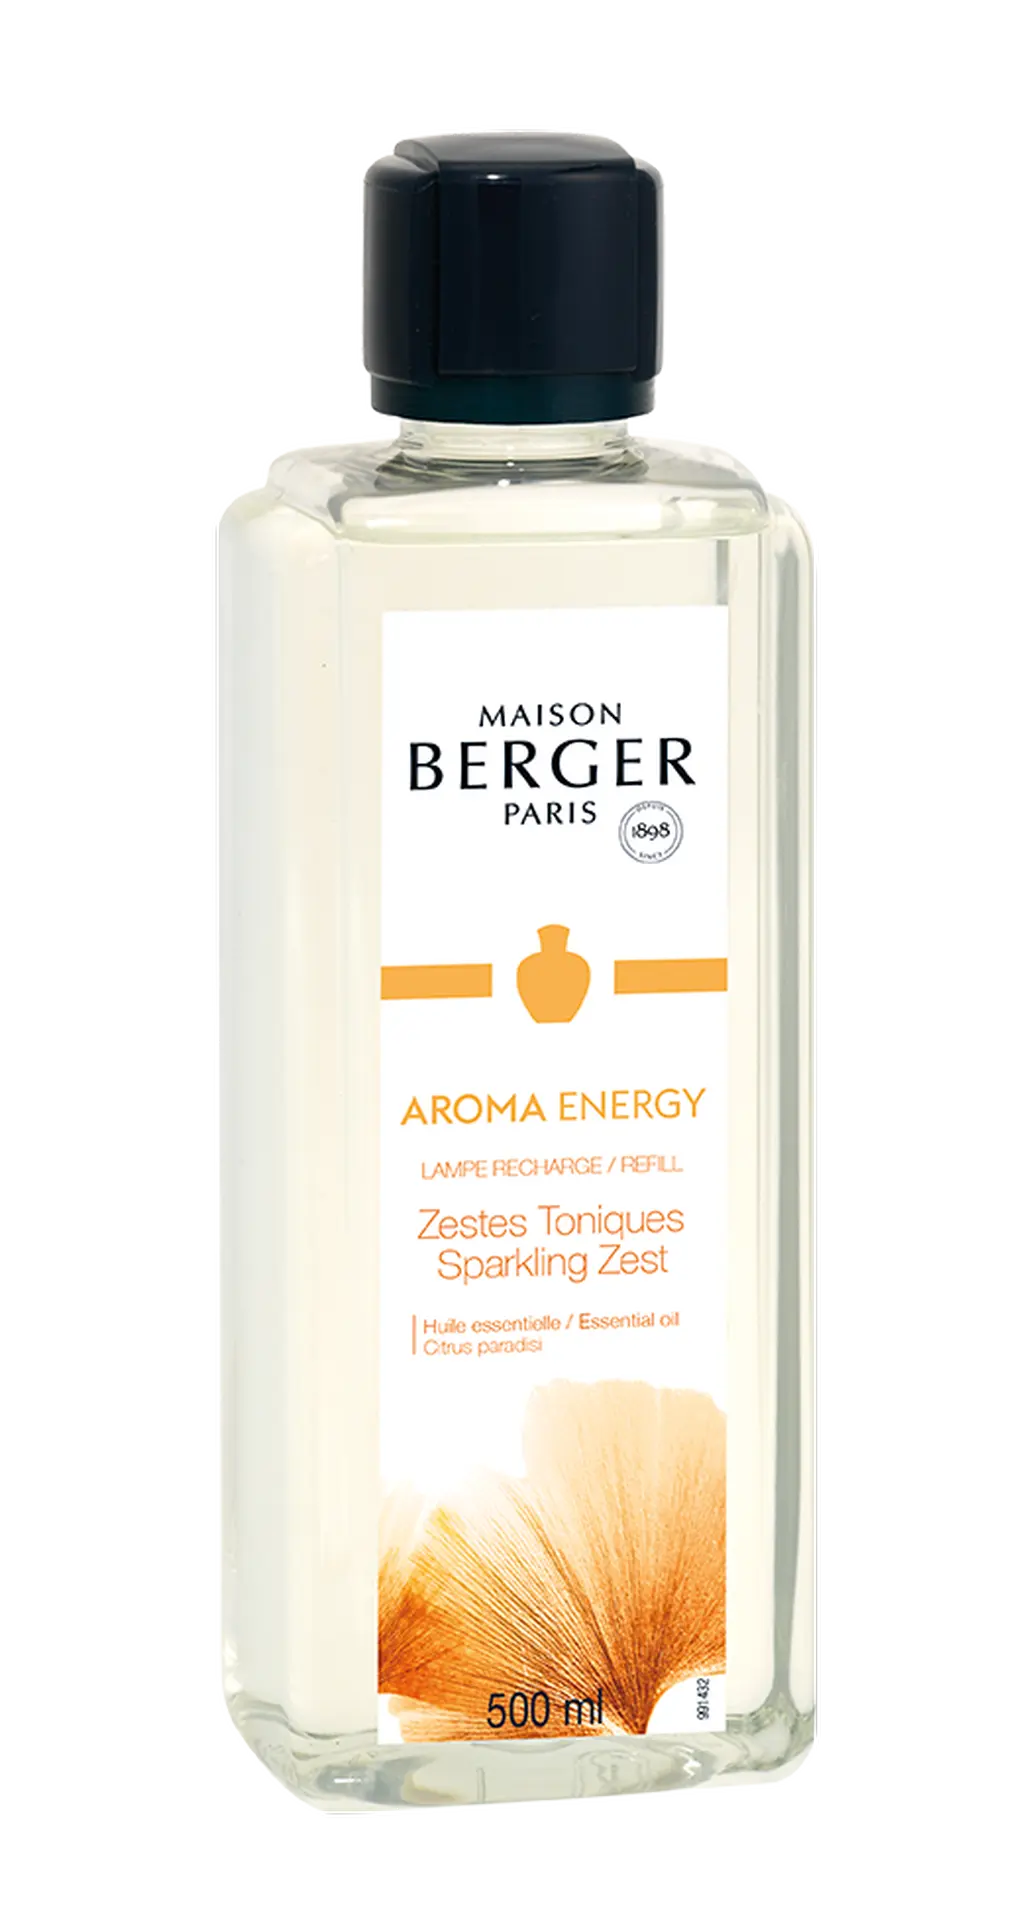 MAISON BERGER PARIS - Sparkling Zest – Lampe Berger Duft 500 ml - Aroma Energy - Maison Berger Refill